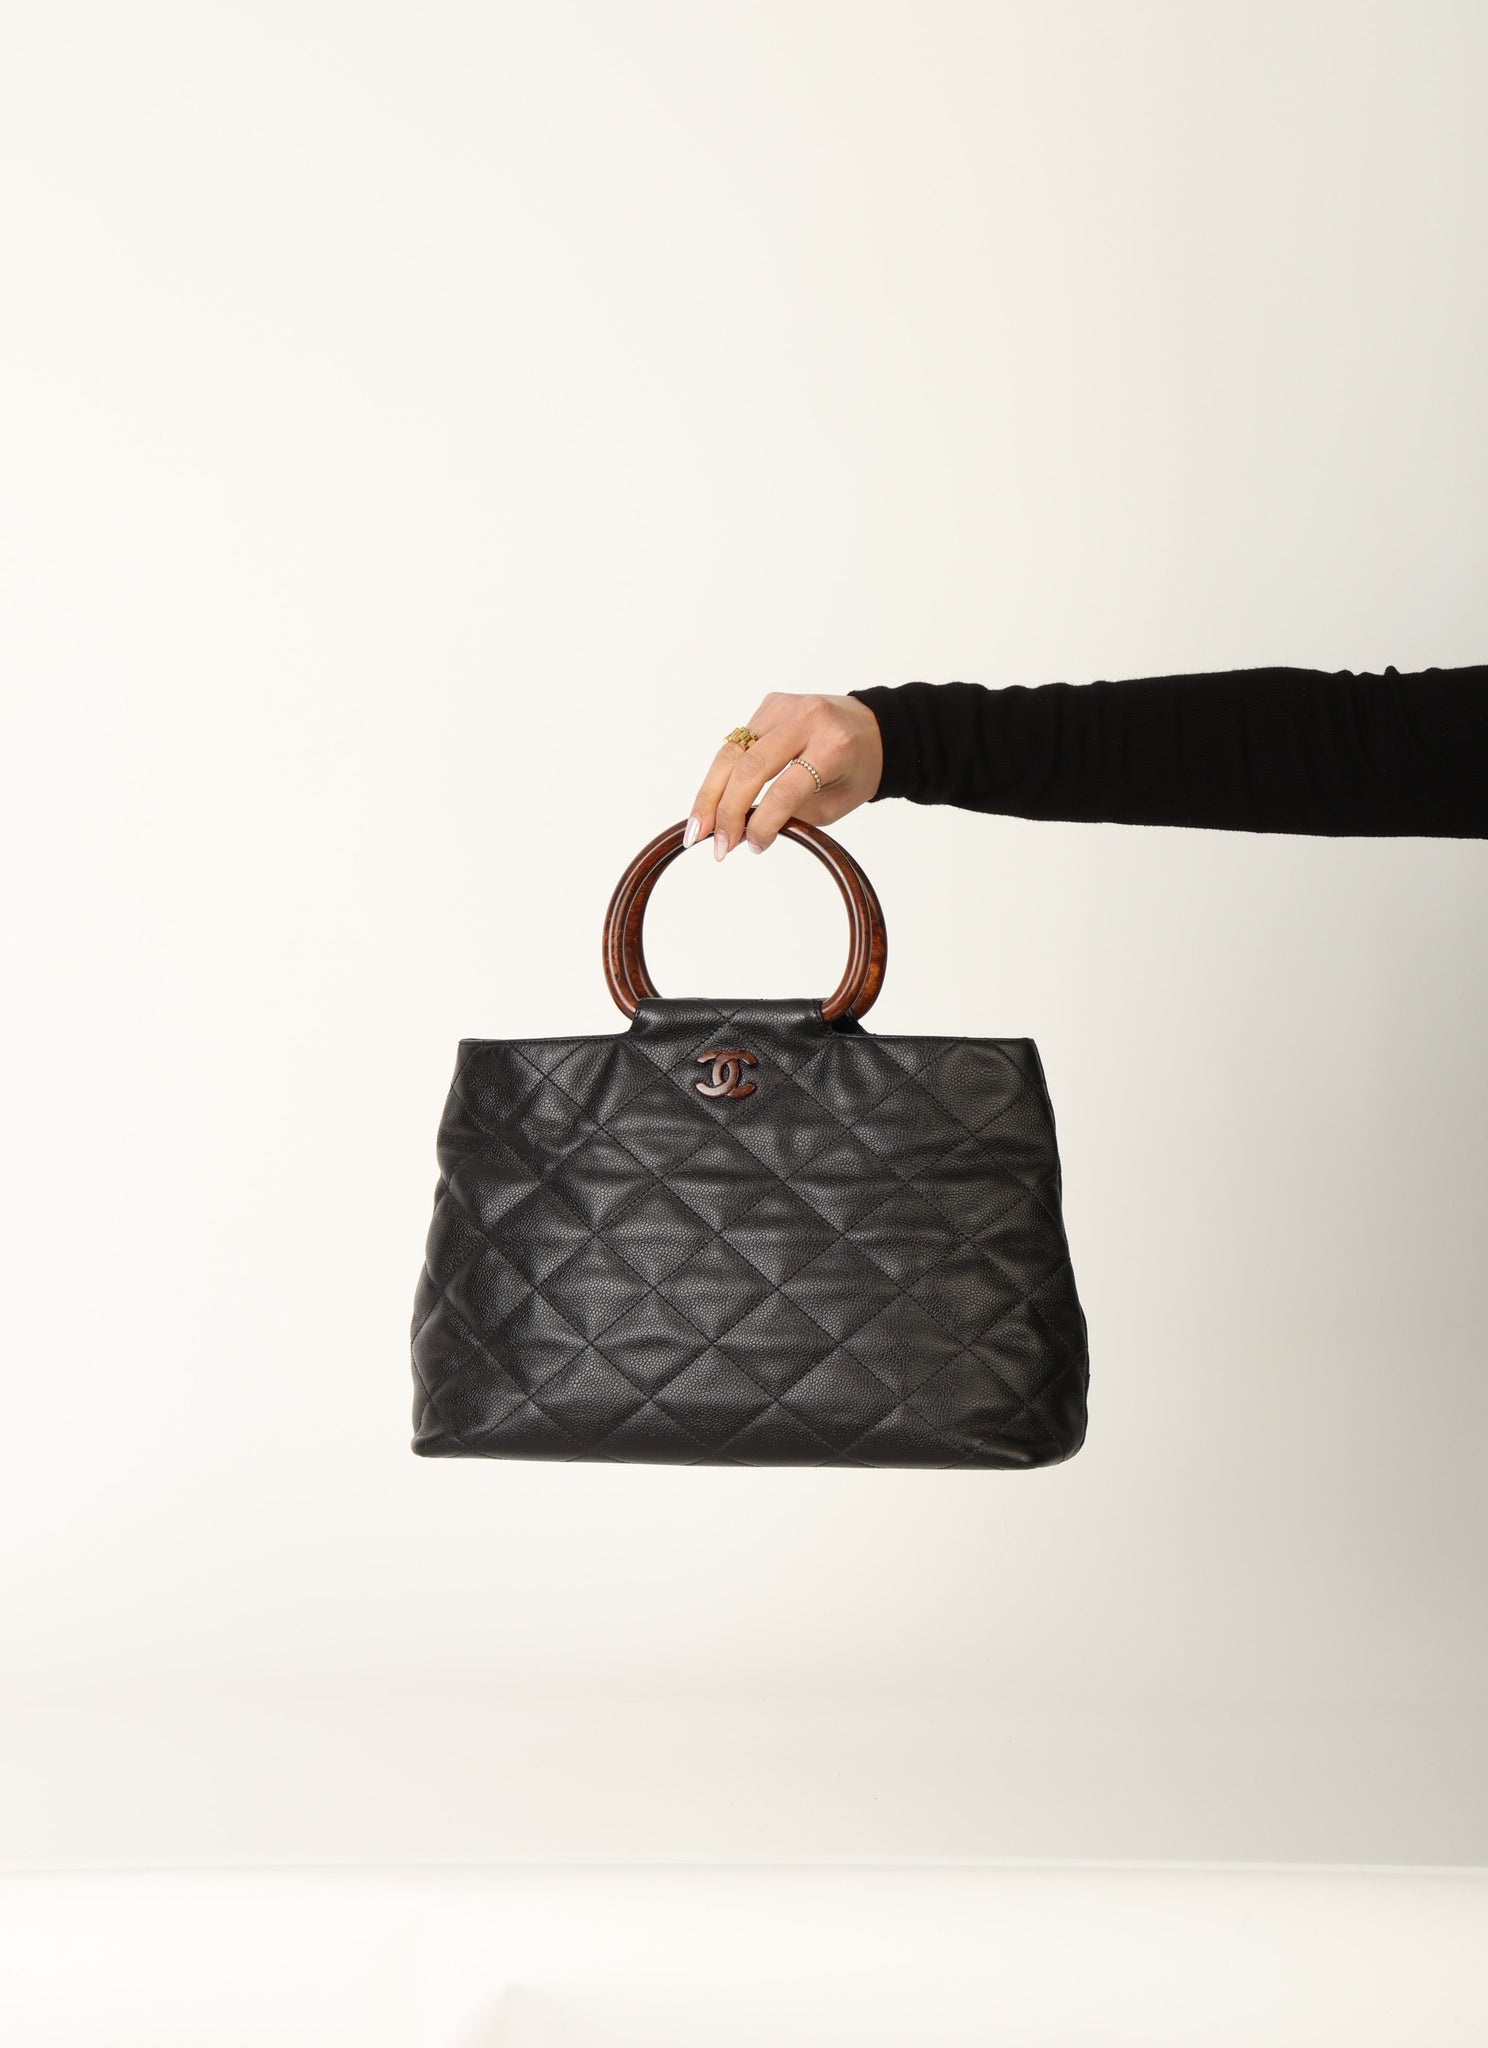 Chanel Caviar Acrylic Wood Top Handle Bag